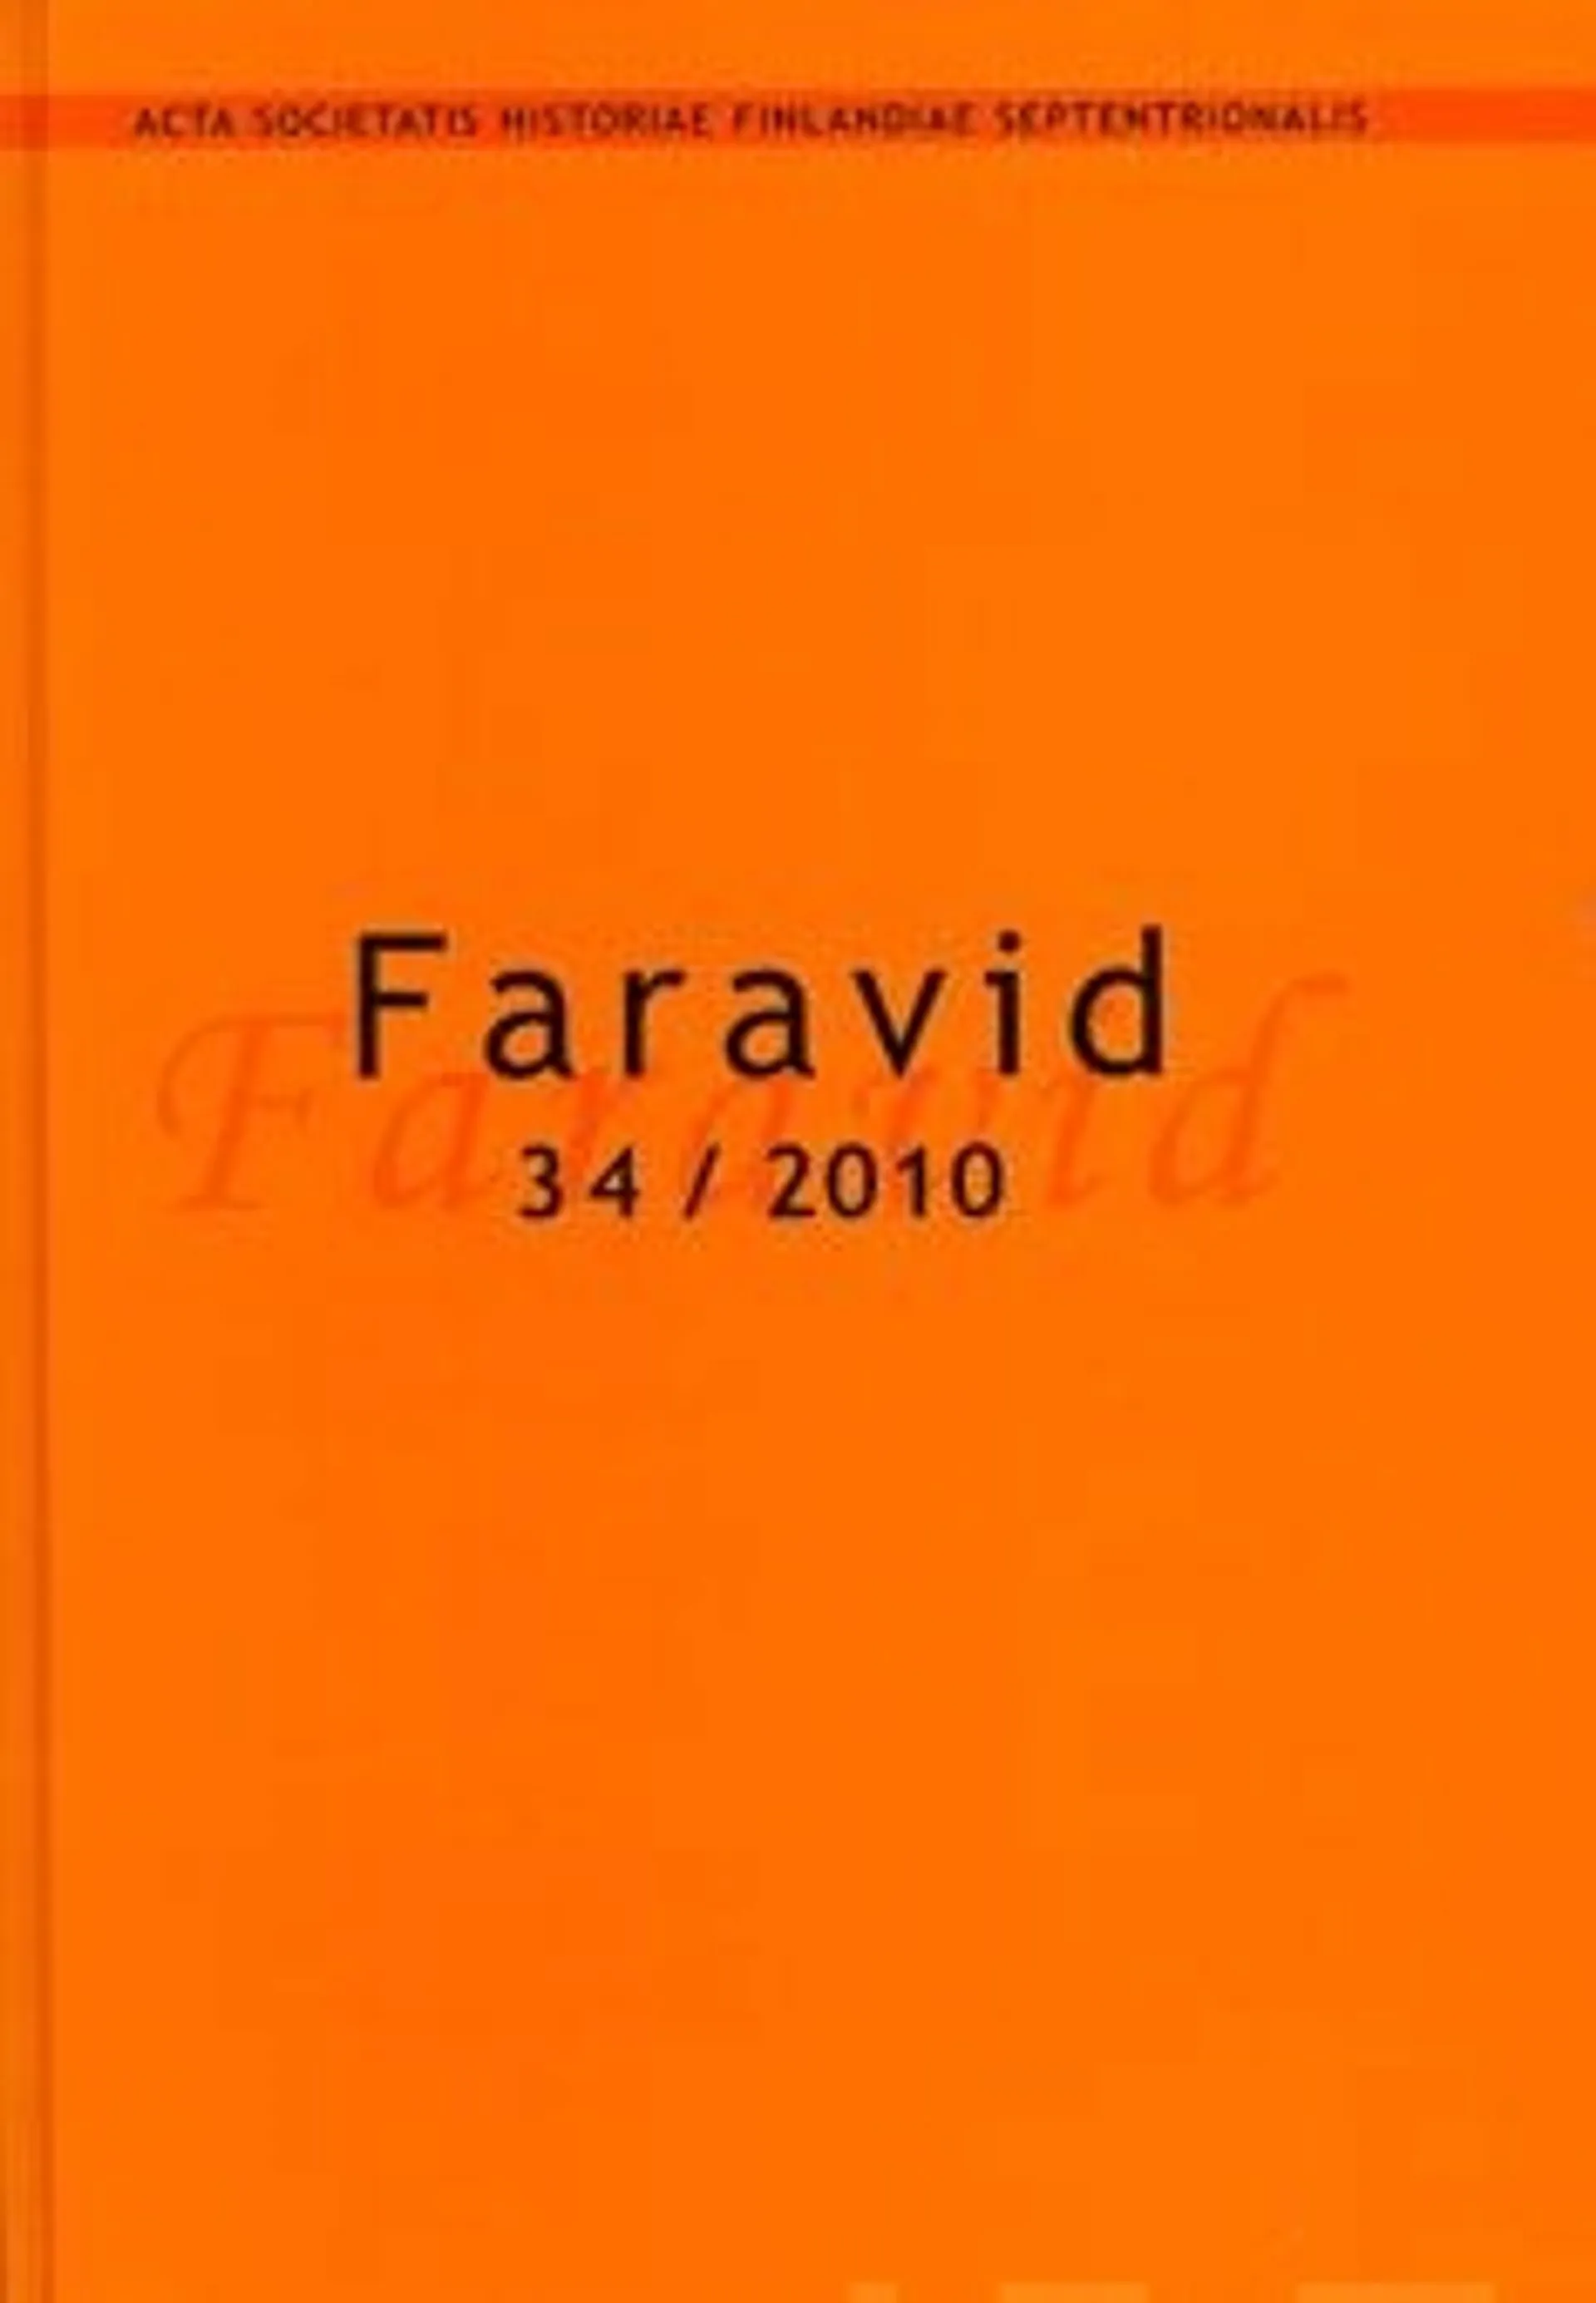 Vaneeckhout, Faravid 34/2010